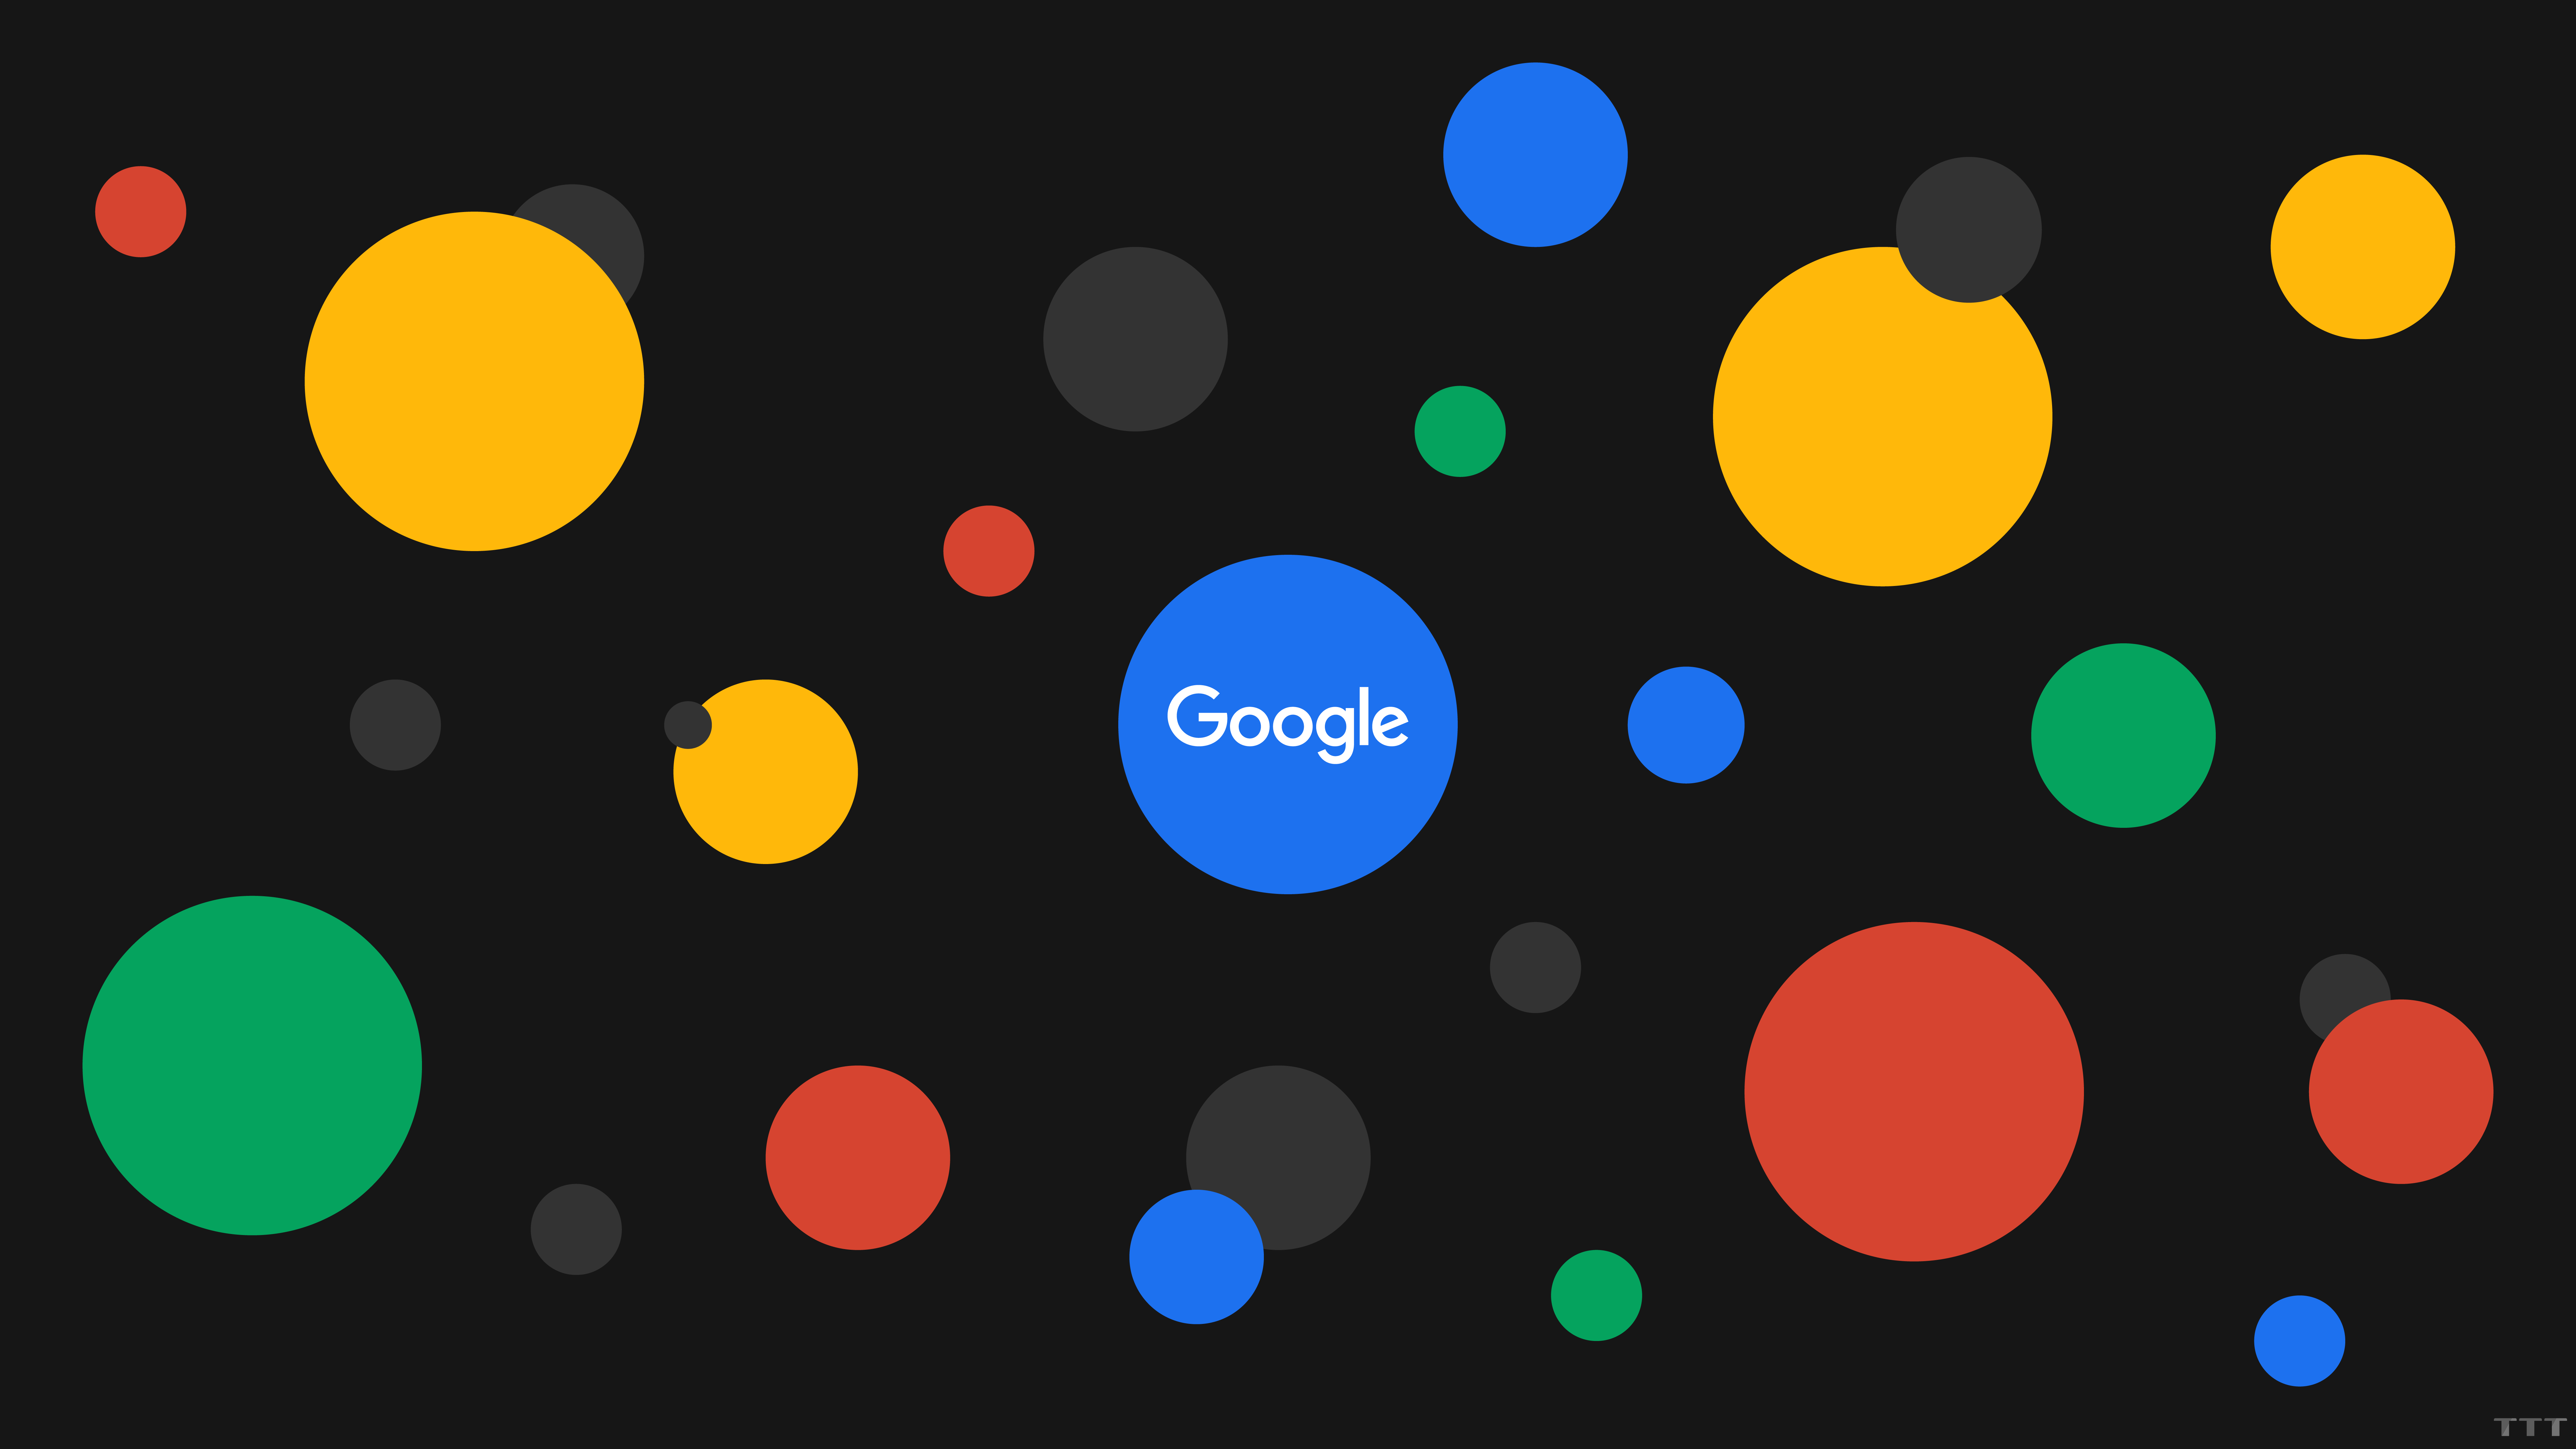 Google Wallpapers - Top Free Google